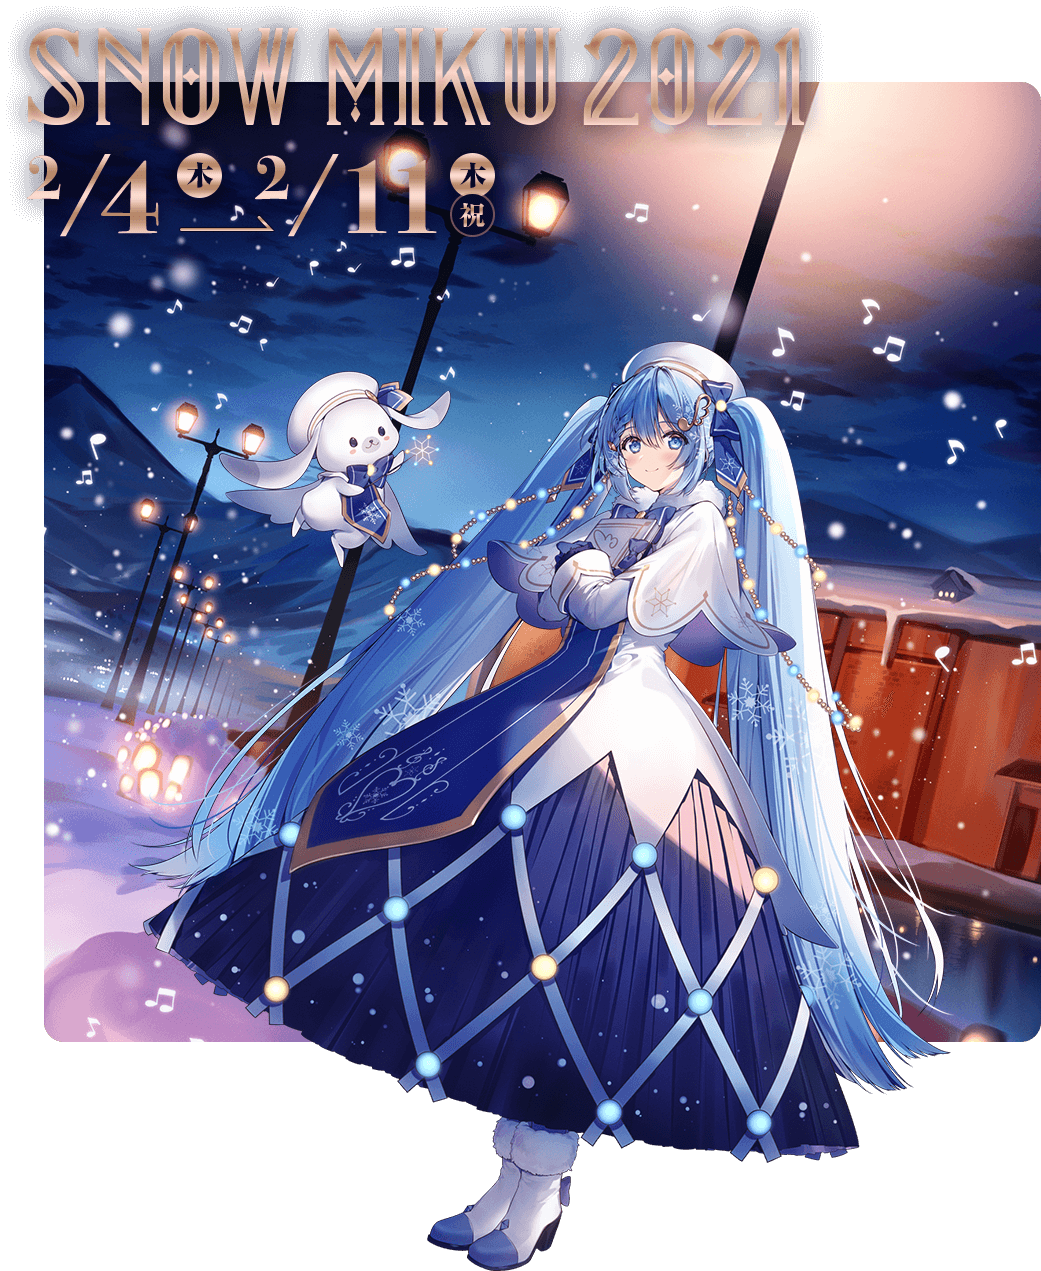 Snow Miku 2021 チケット受付ページ